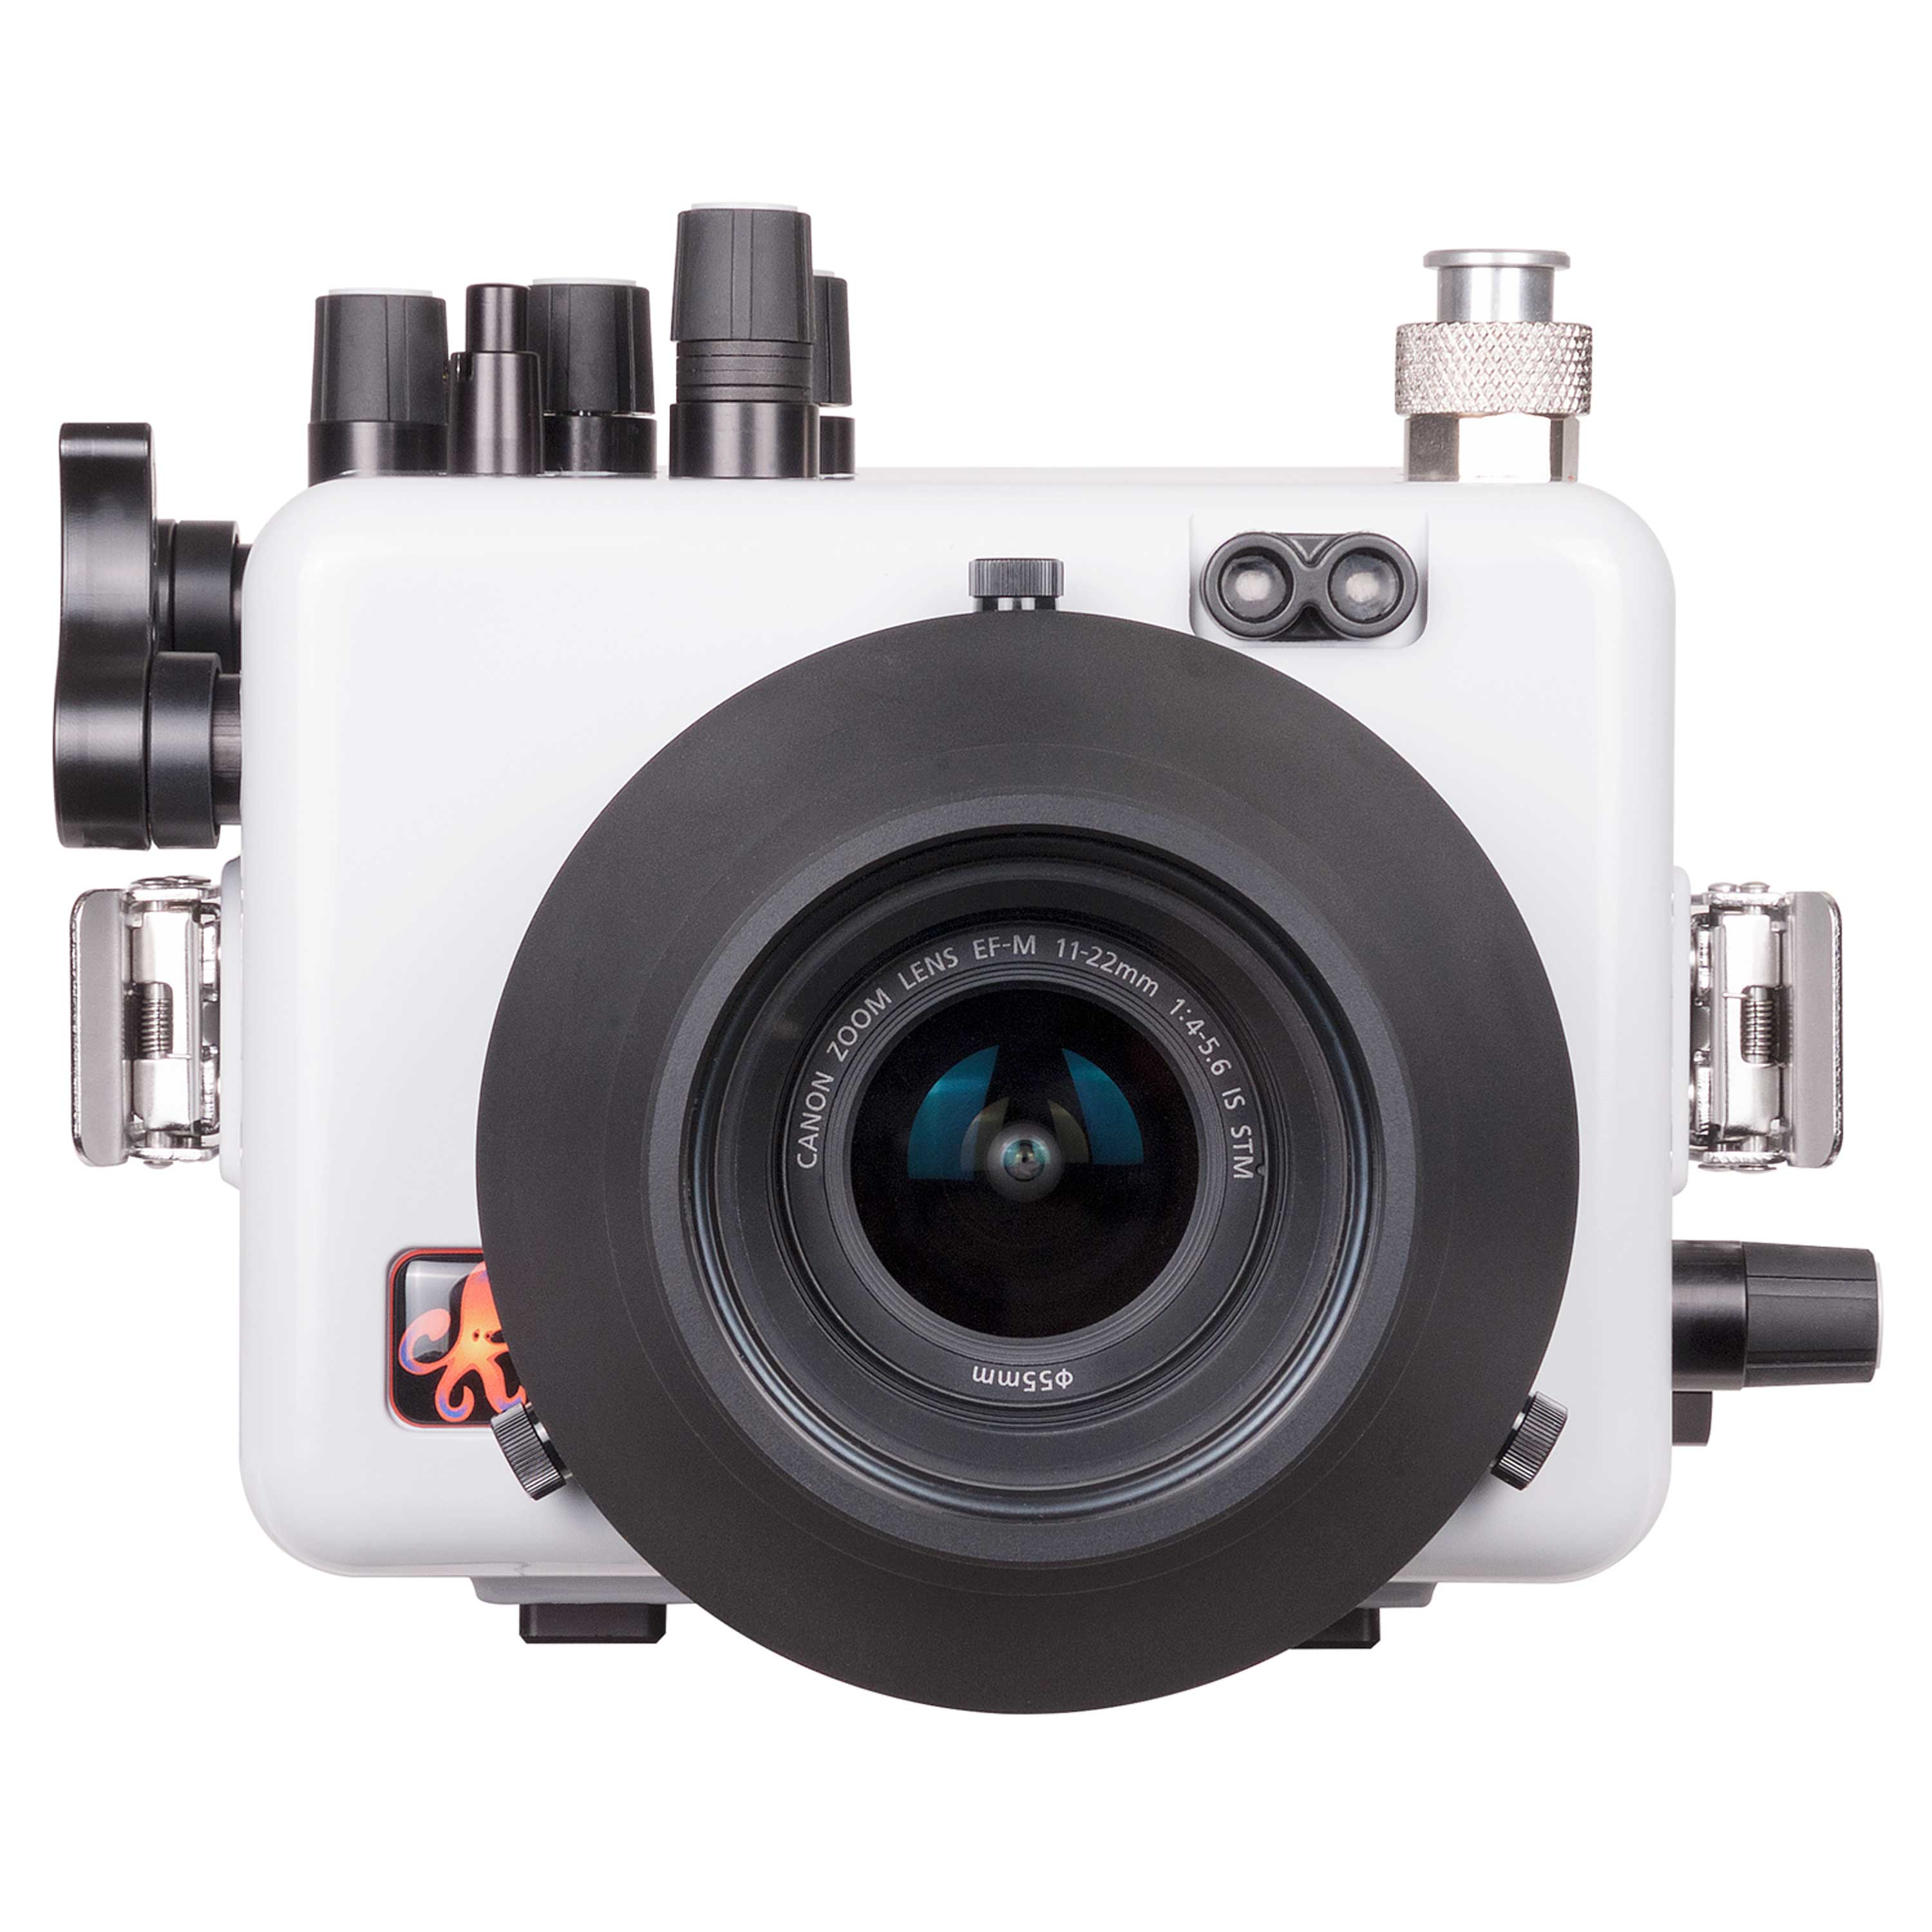 200DLM/A Underwater Housing for Canon EOS M6 Mirrorless Digital Camera